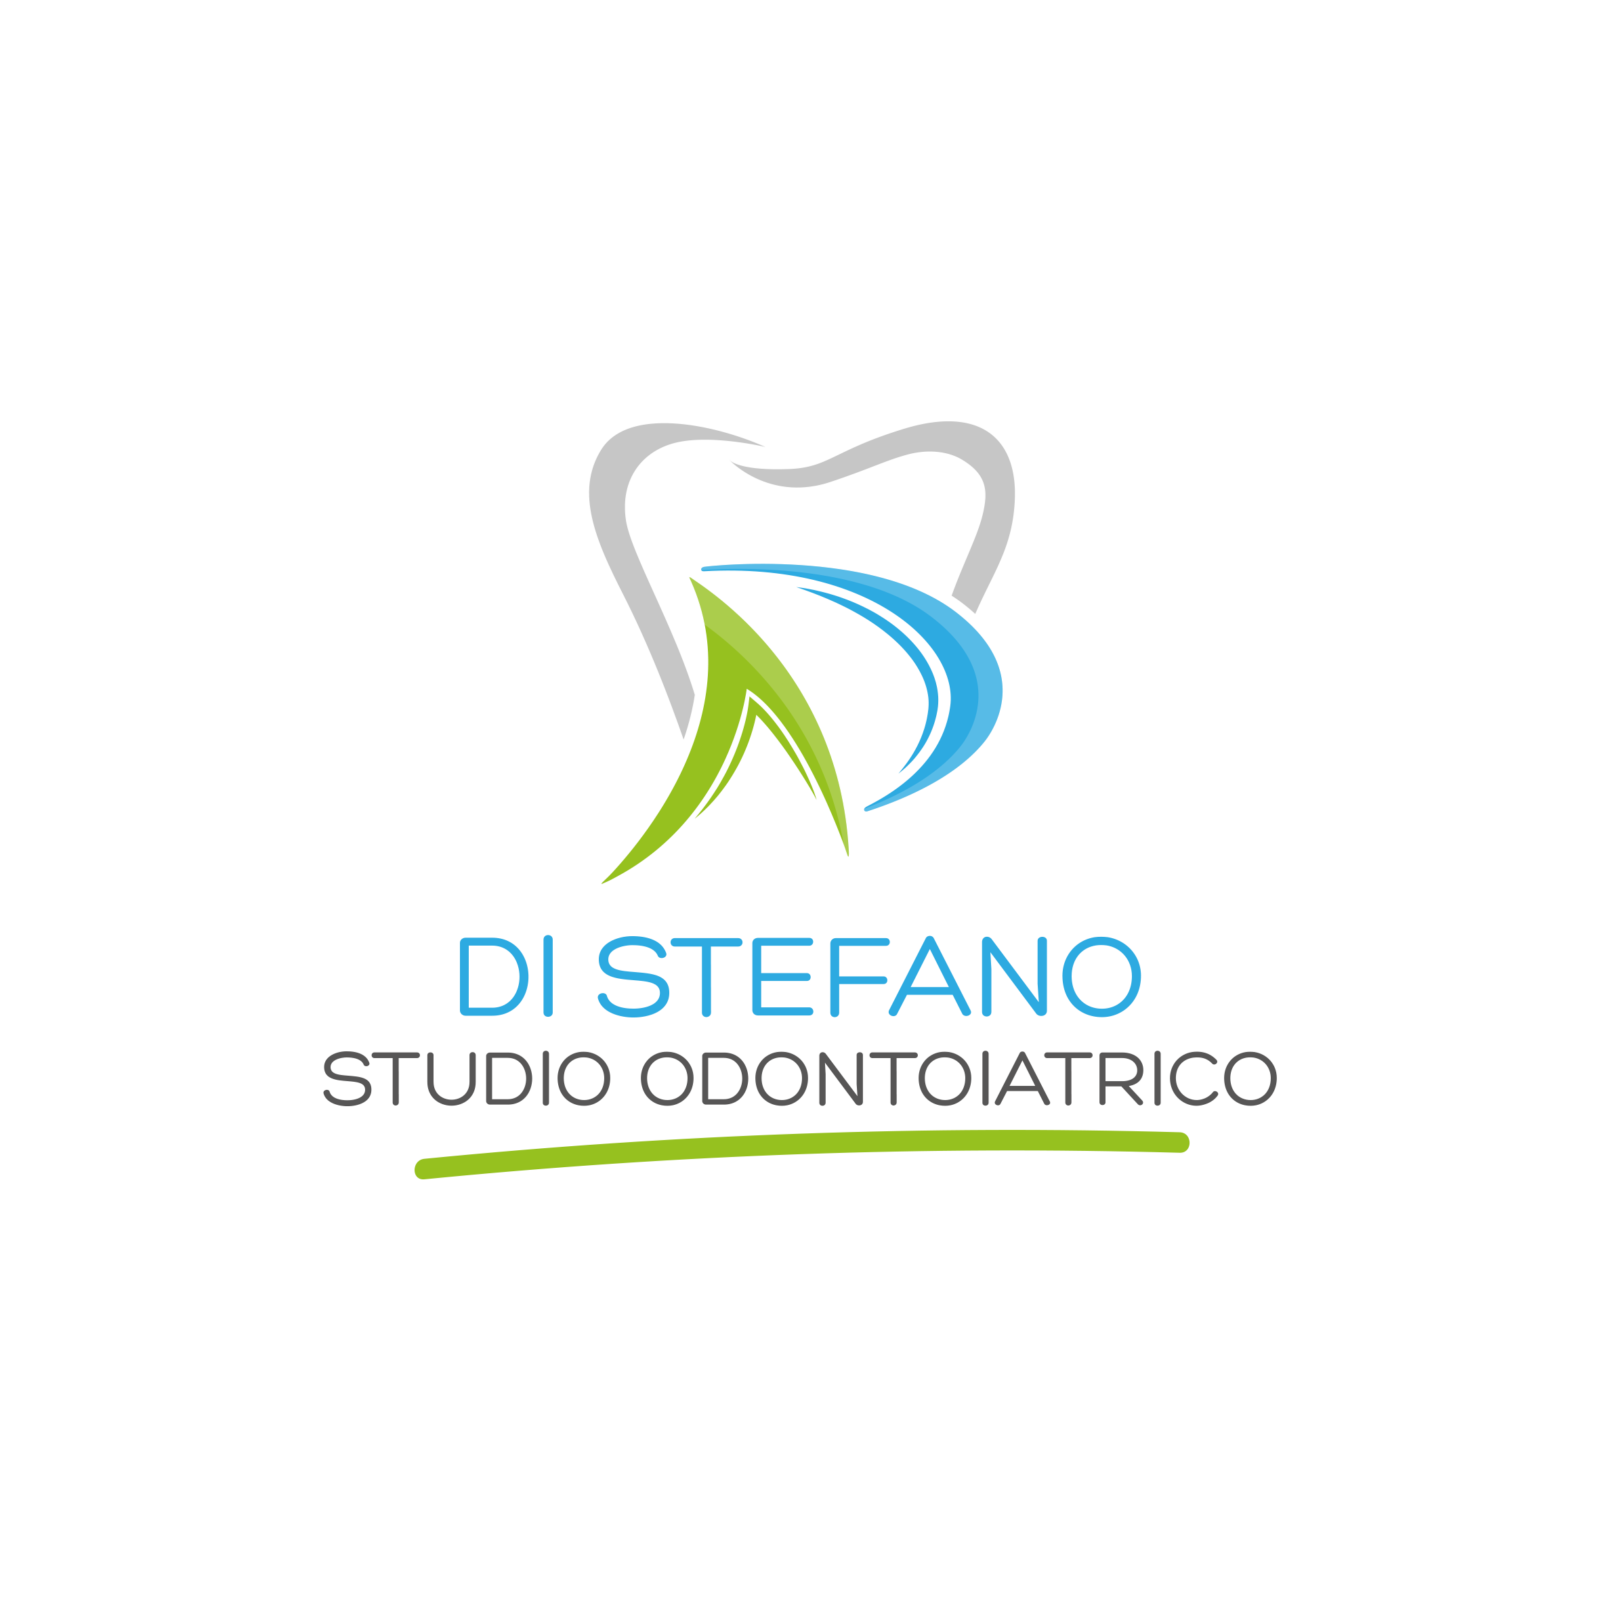 Studio Odontoiatrico Di Stefano